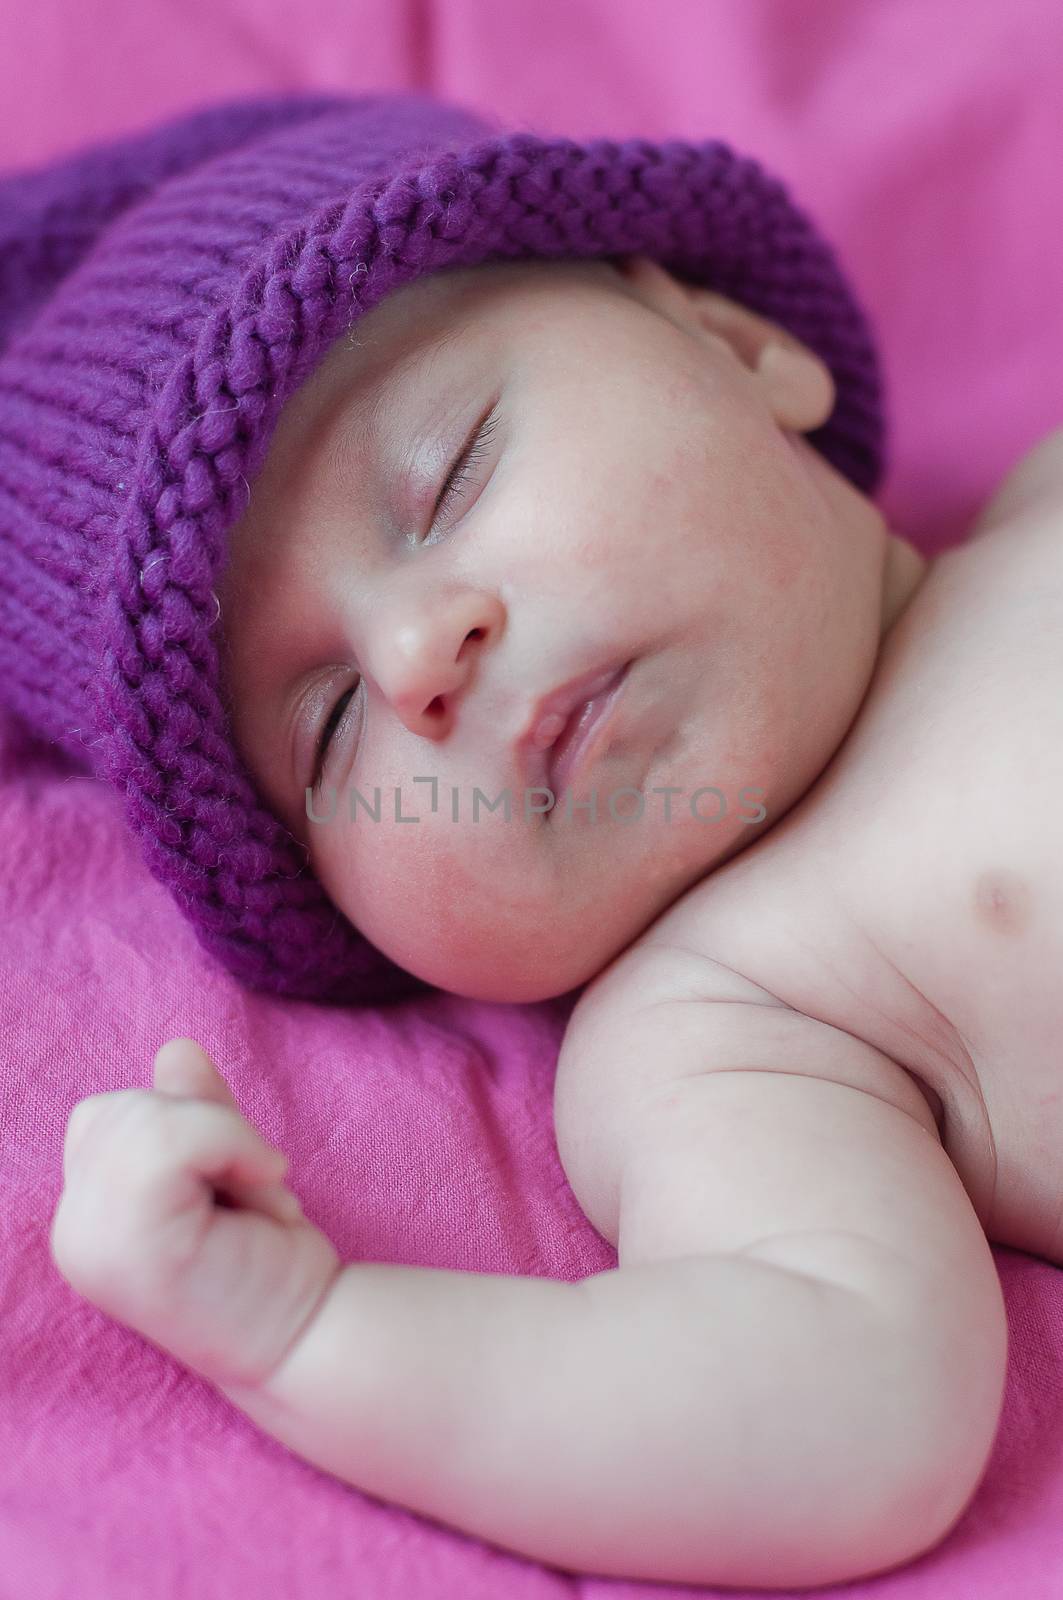 Little baby in hat sleeps peacefully